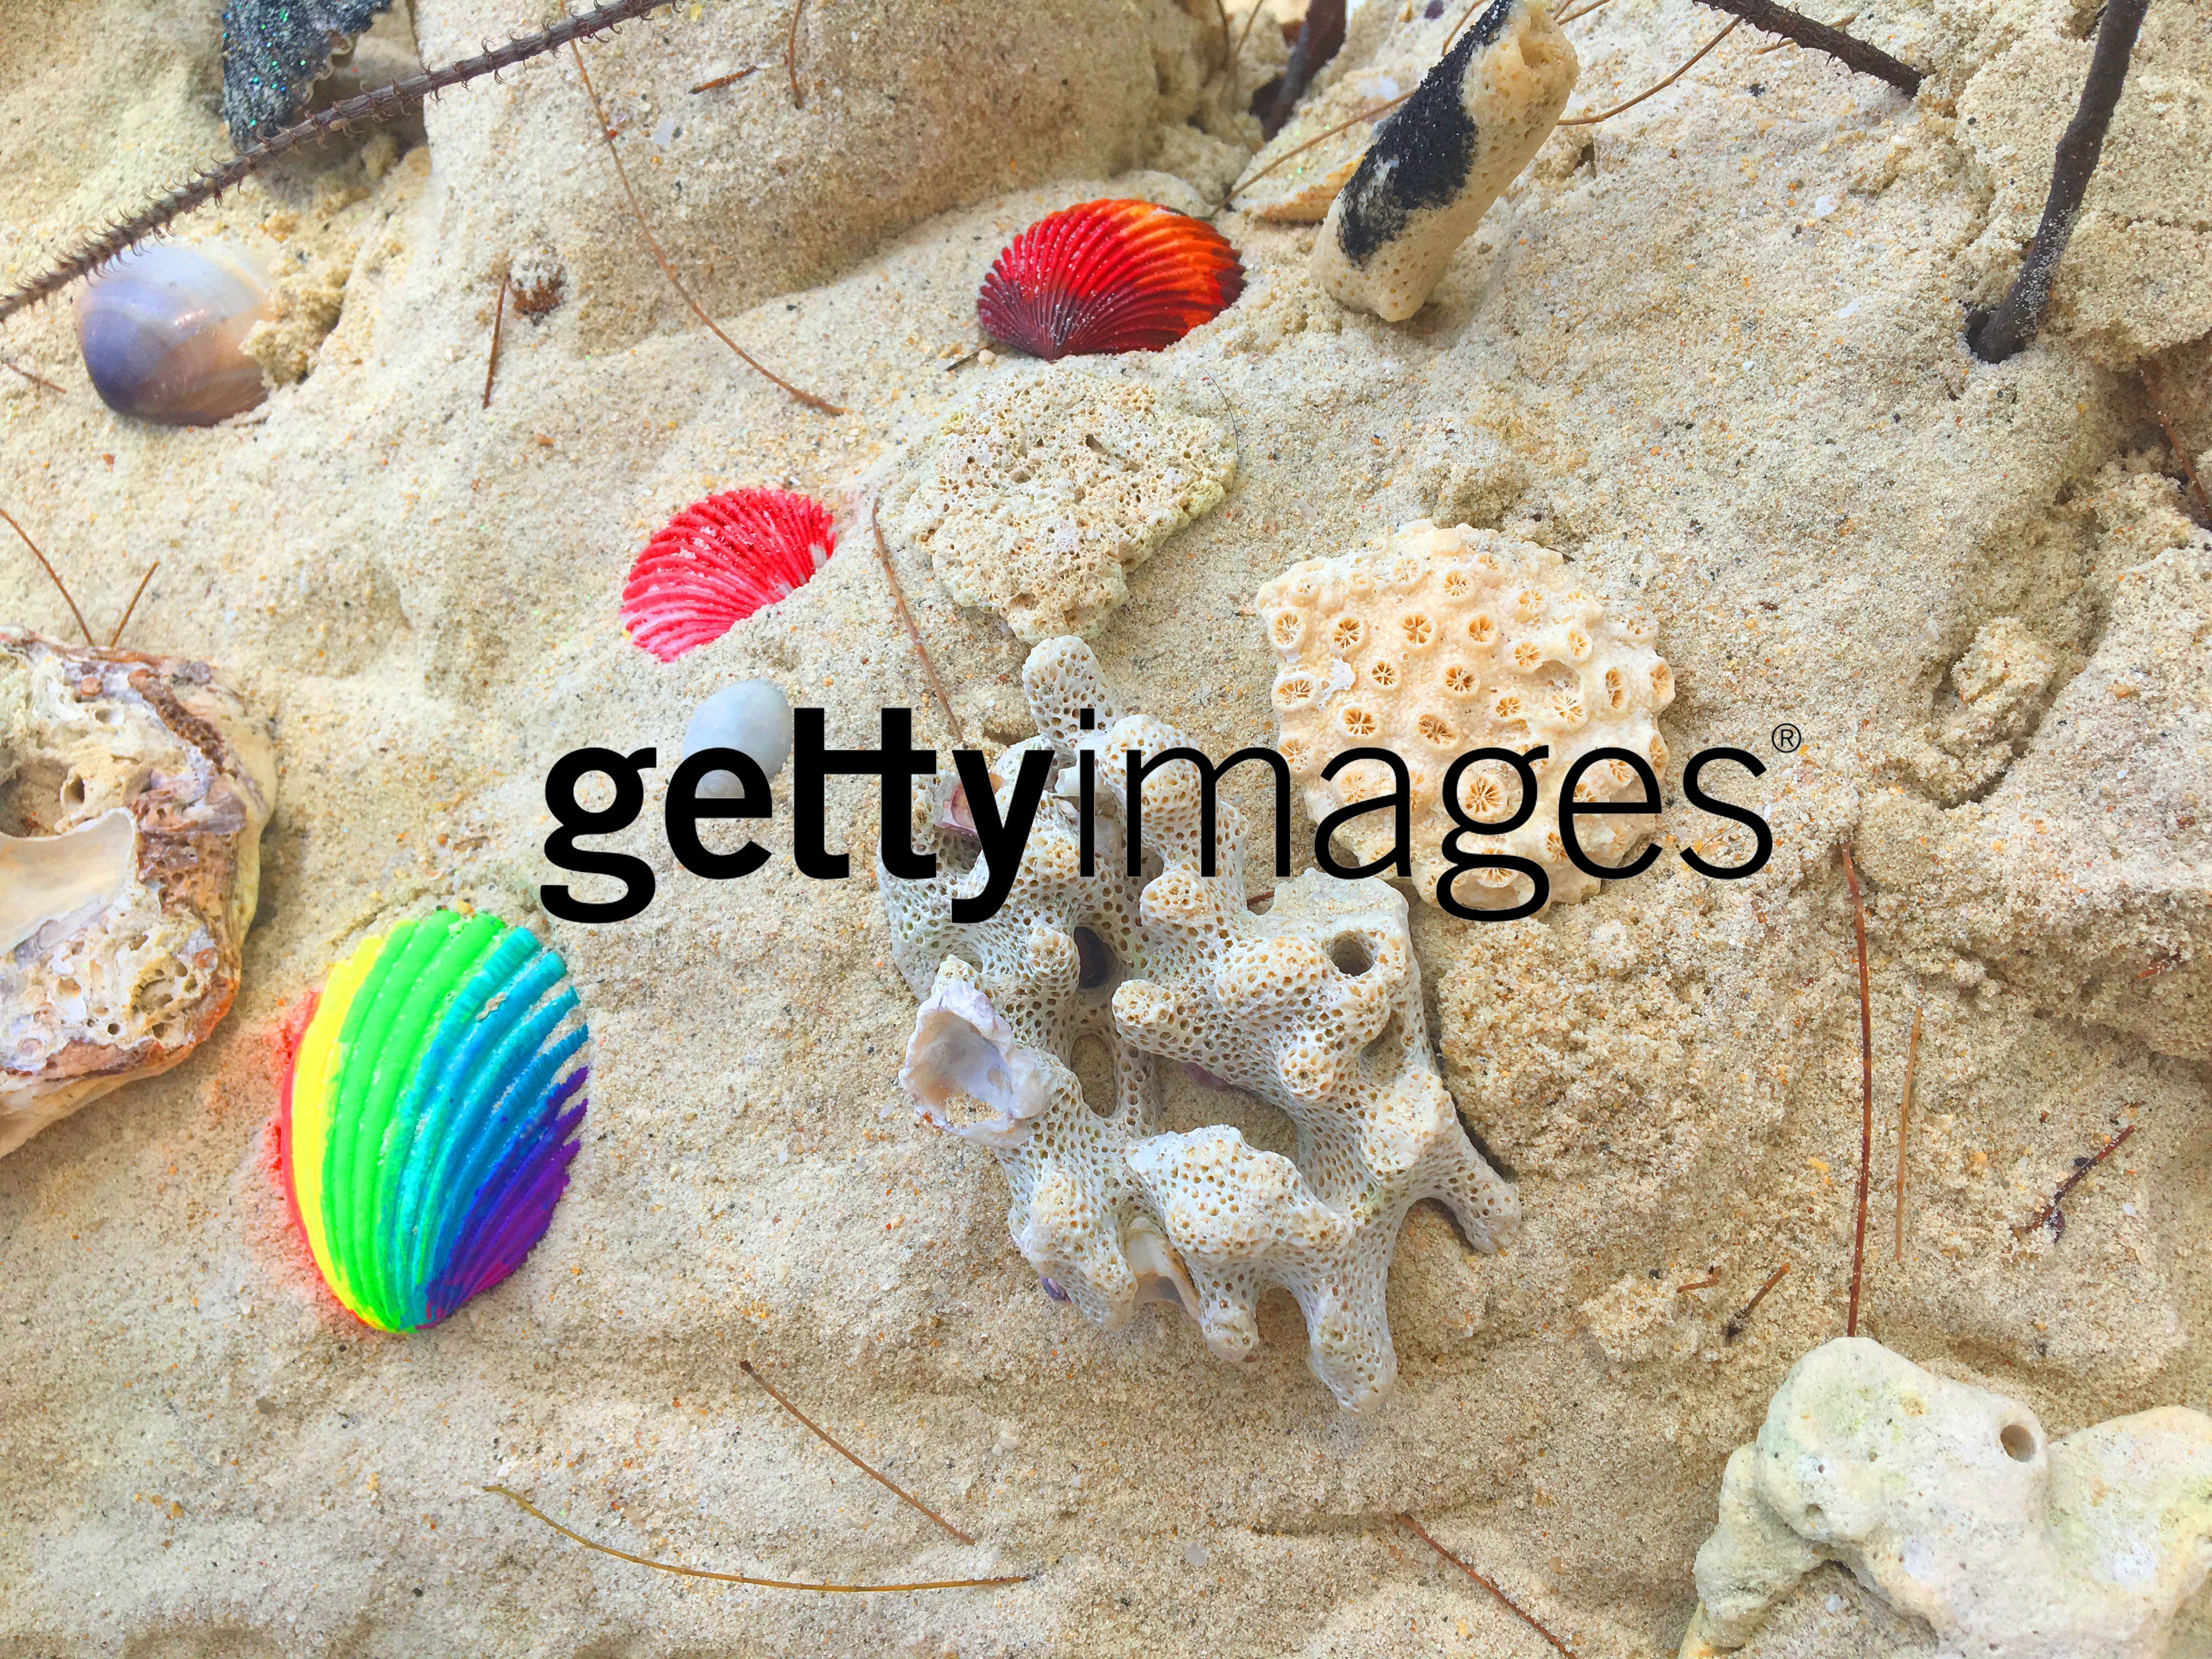 Getty Images水印去除工具 | 免费下载.